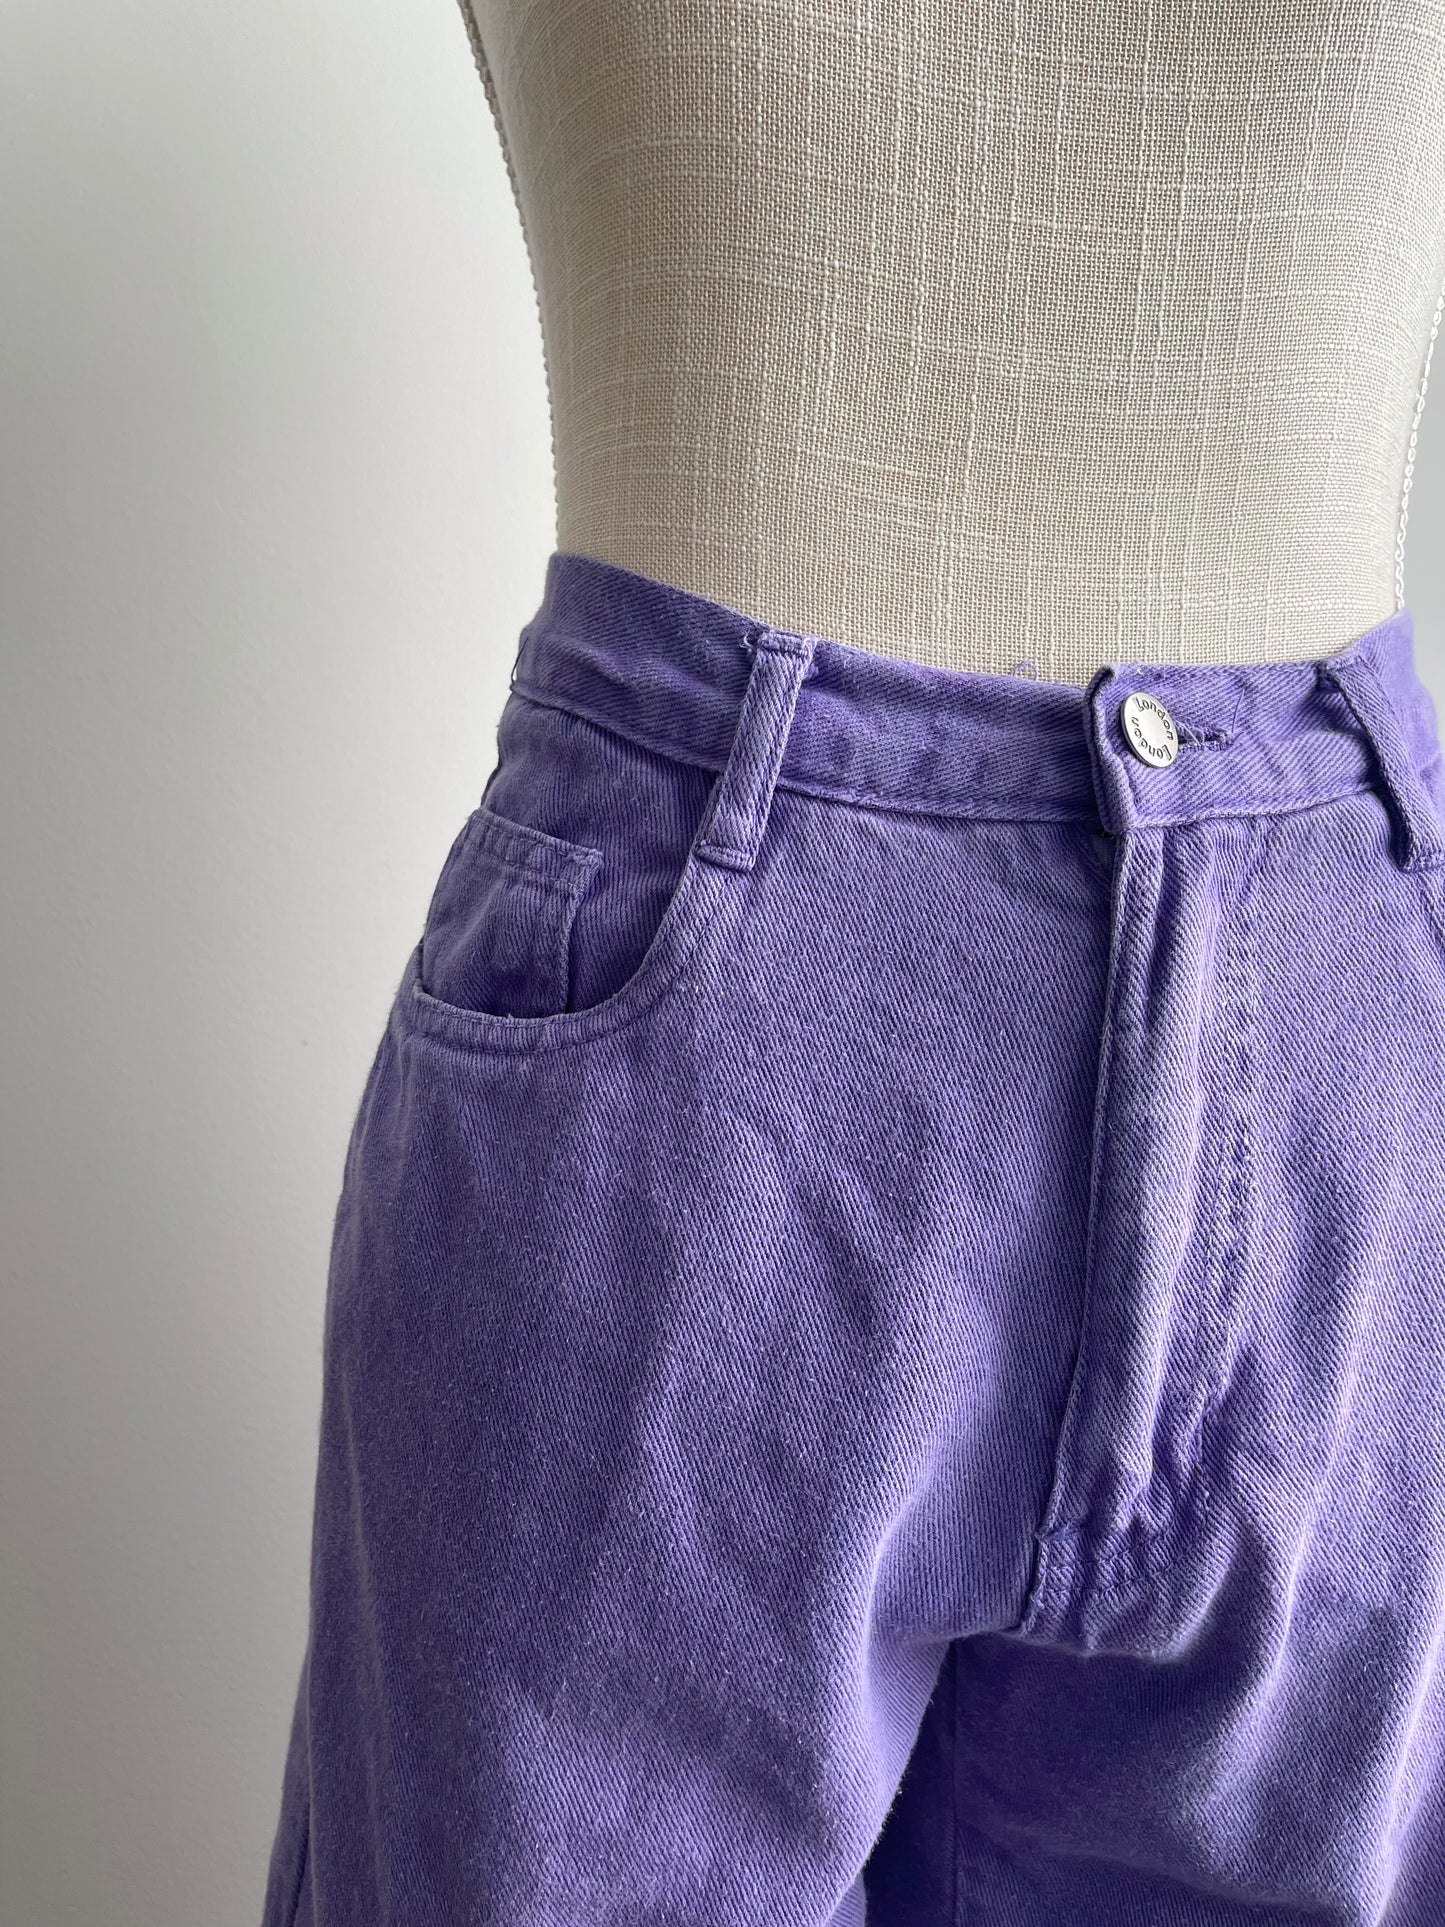 London London Vintage Purple Denim Shorts